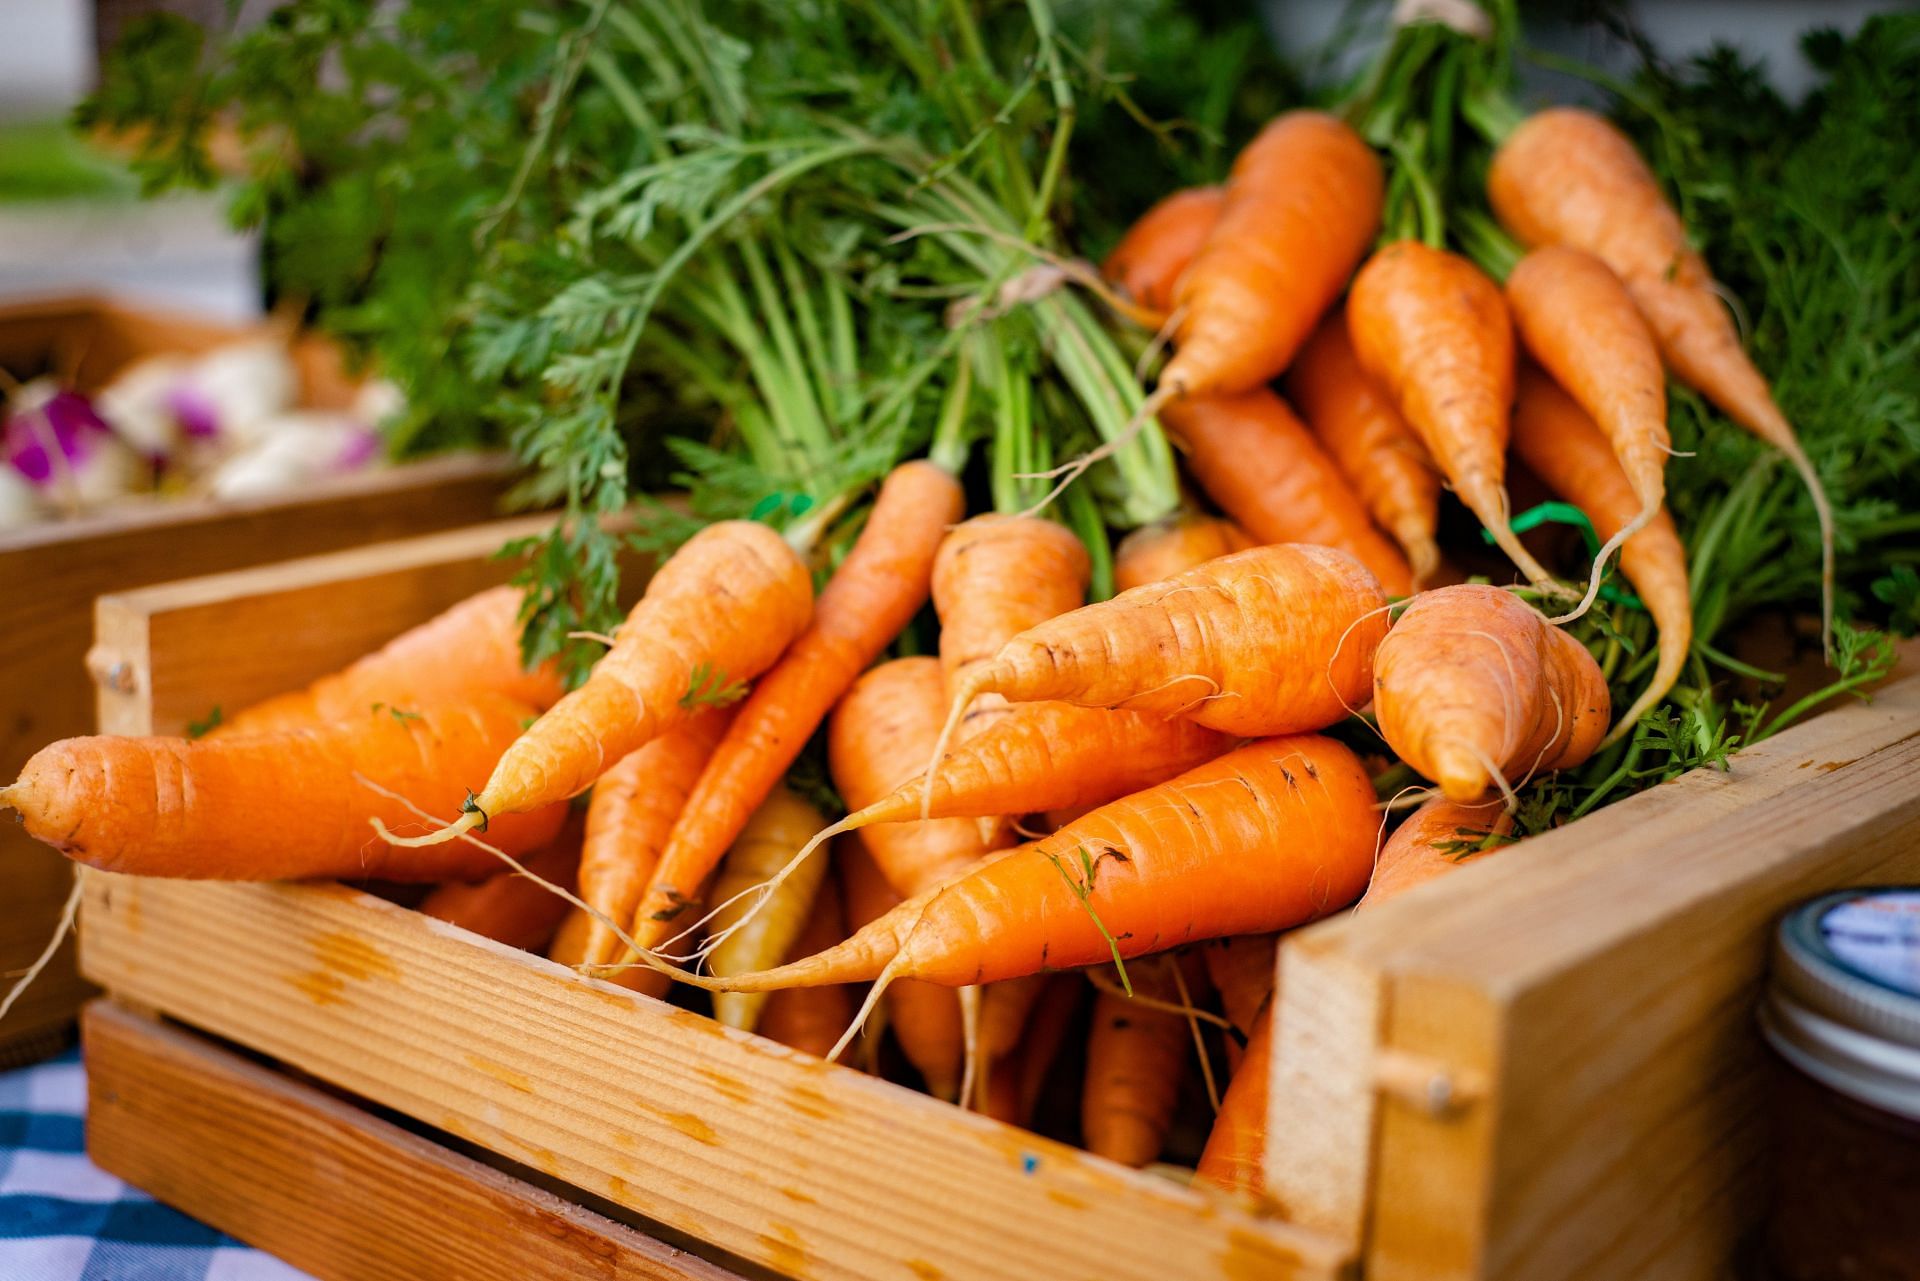 Carrots for eyesight (Image via Unsplash/David)